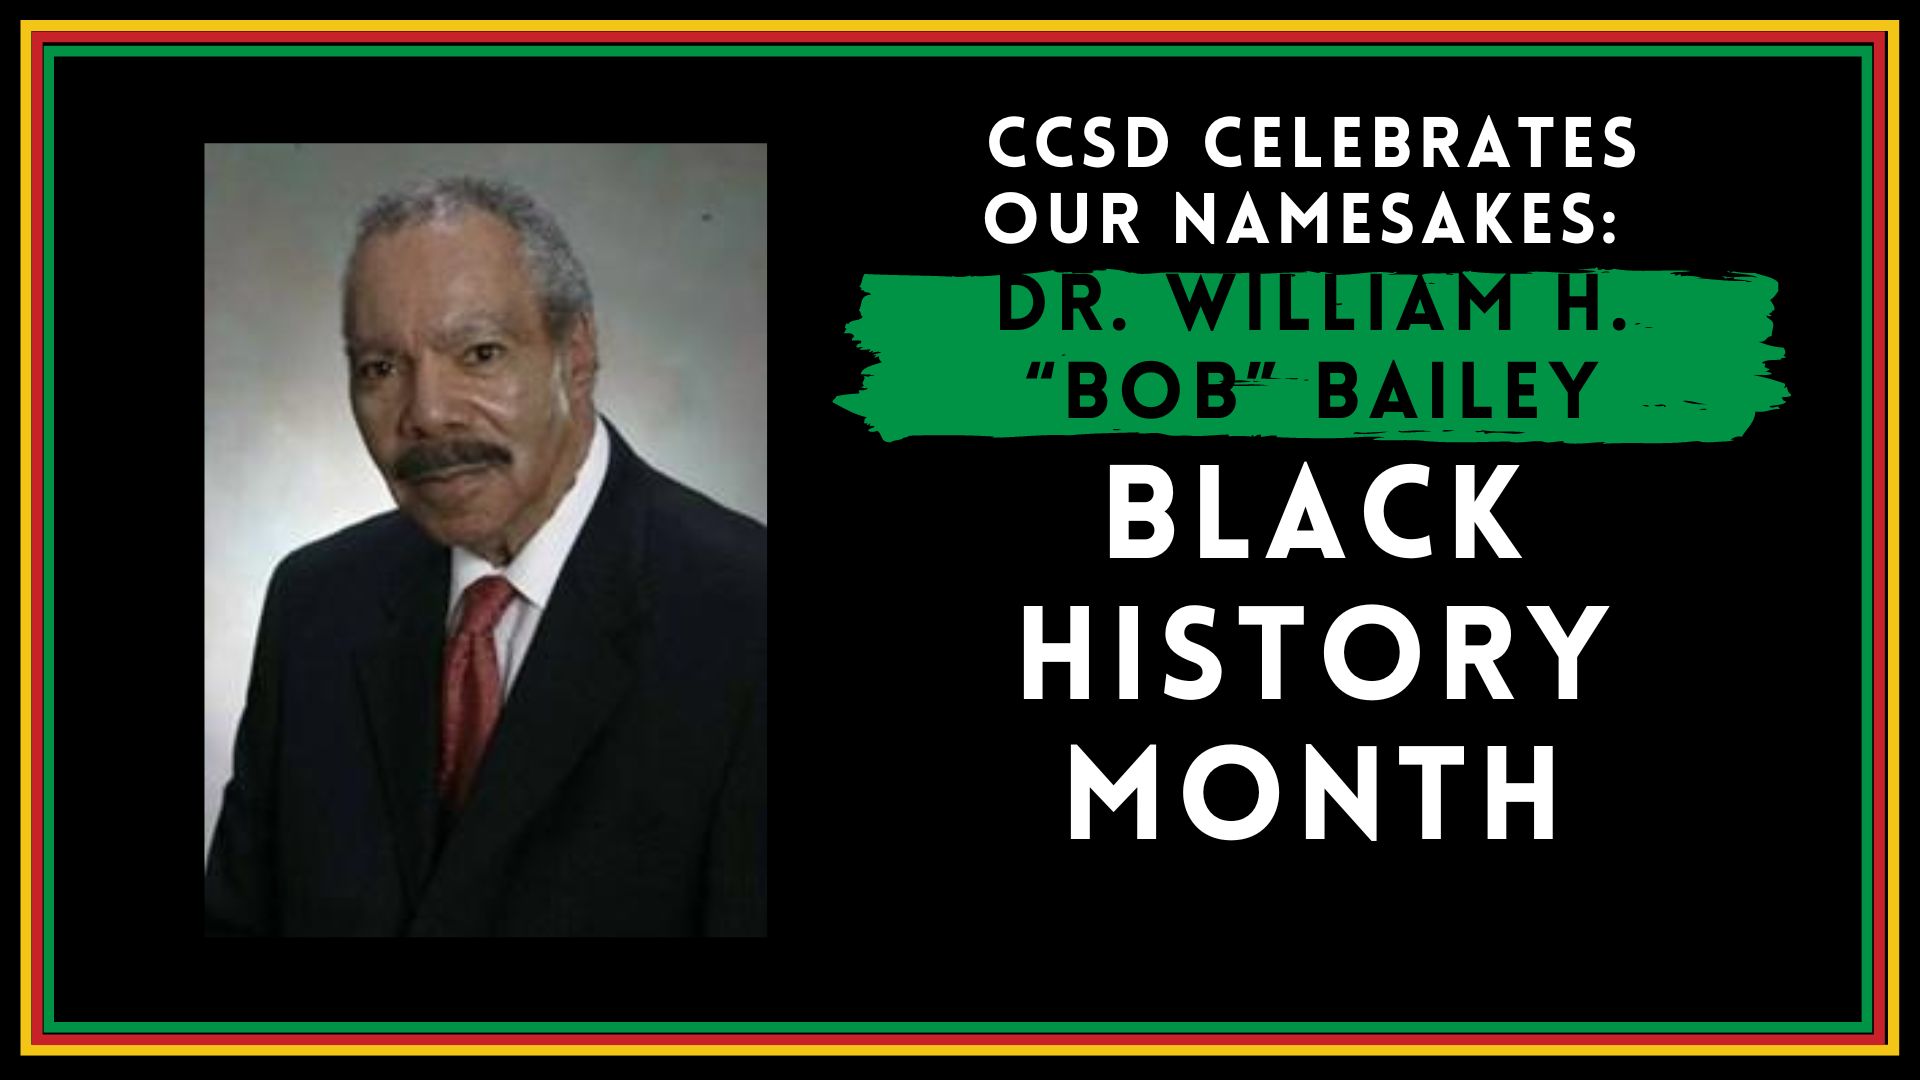 CCSD celebrates its namesakes: Dr. William H. “Bob” Bailey